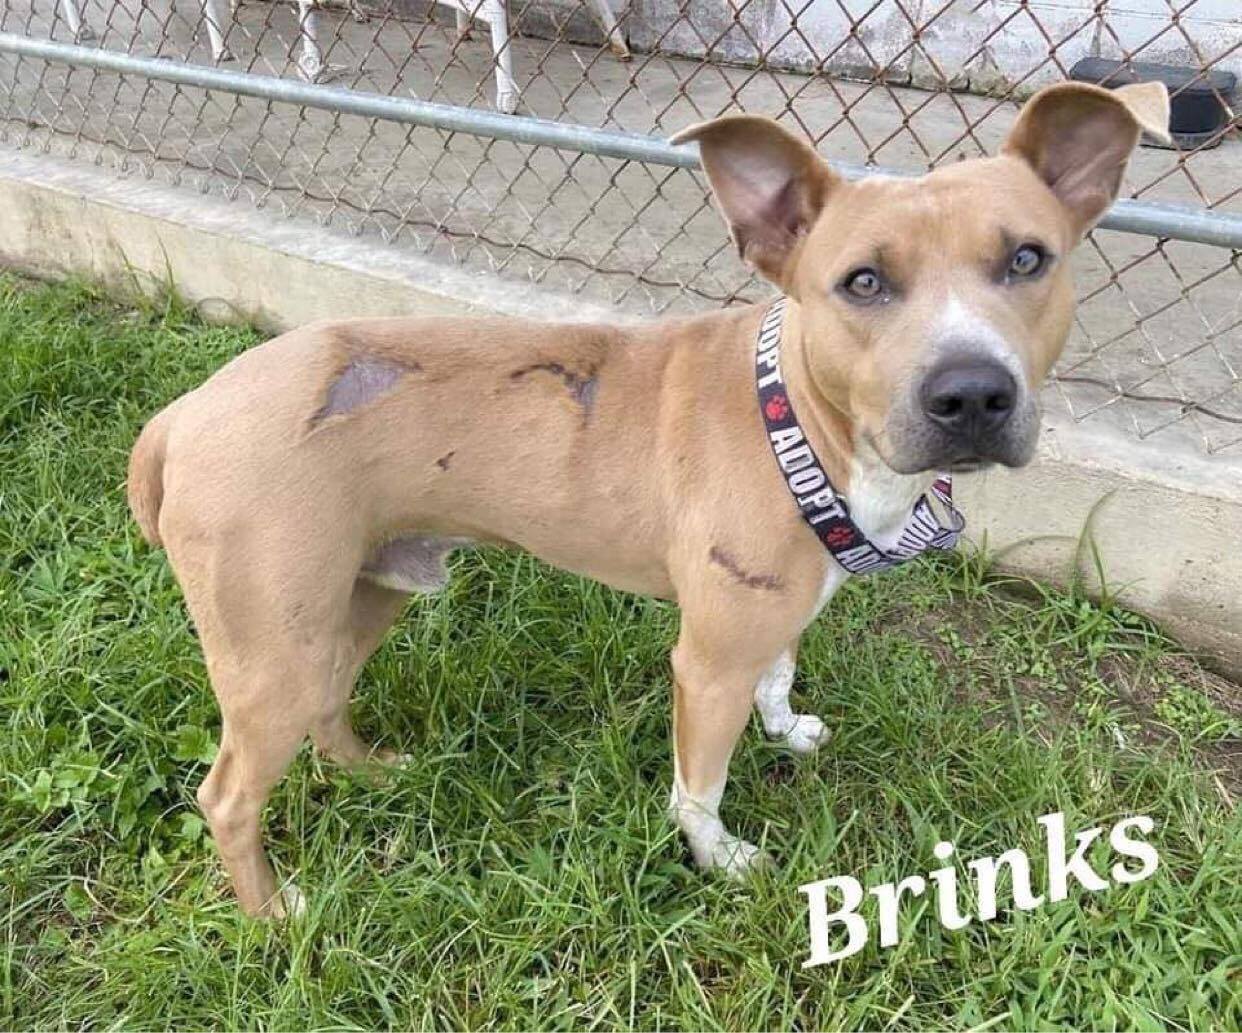 BRINKS, an adoptable Pit Bull Terrier in Orange, TX, 77632 | Photo Image 1